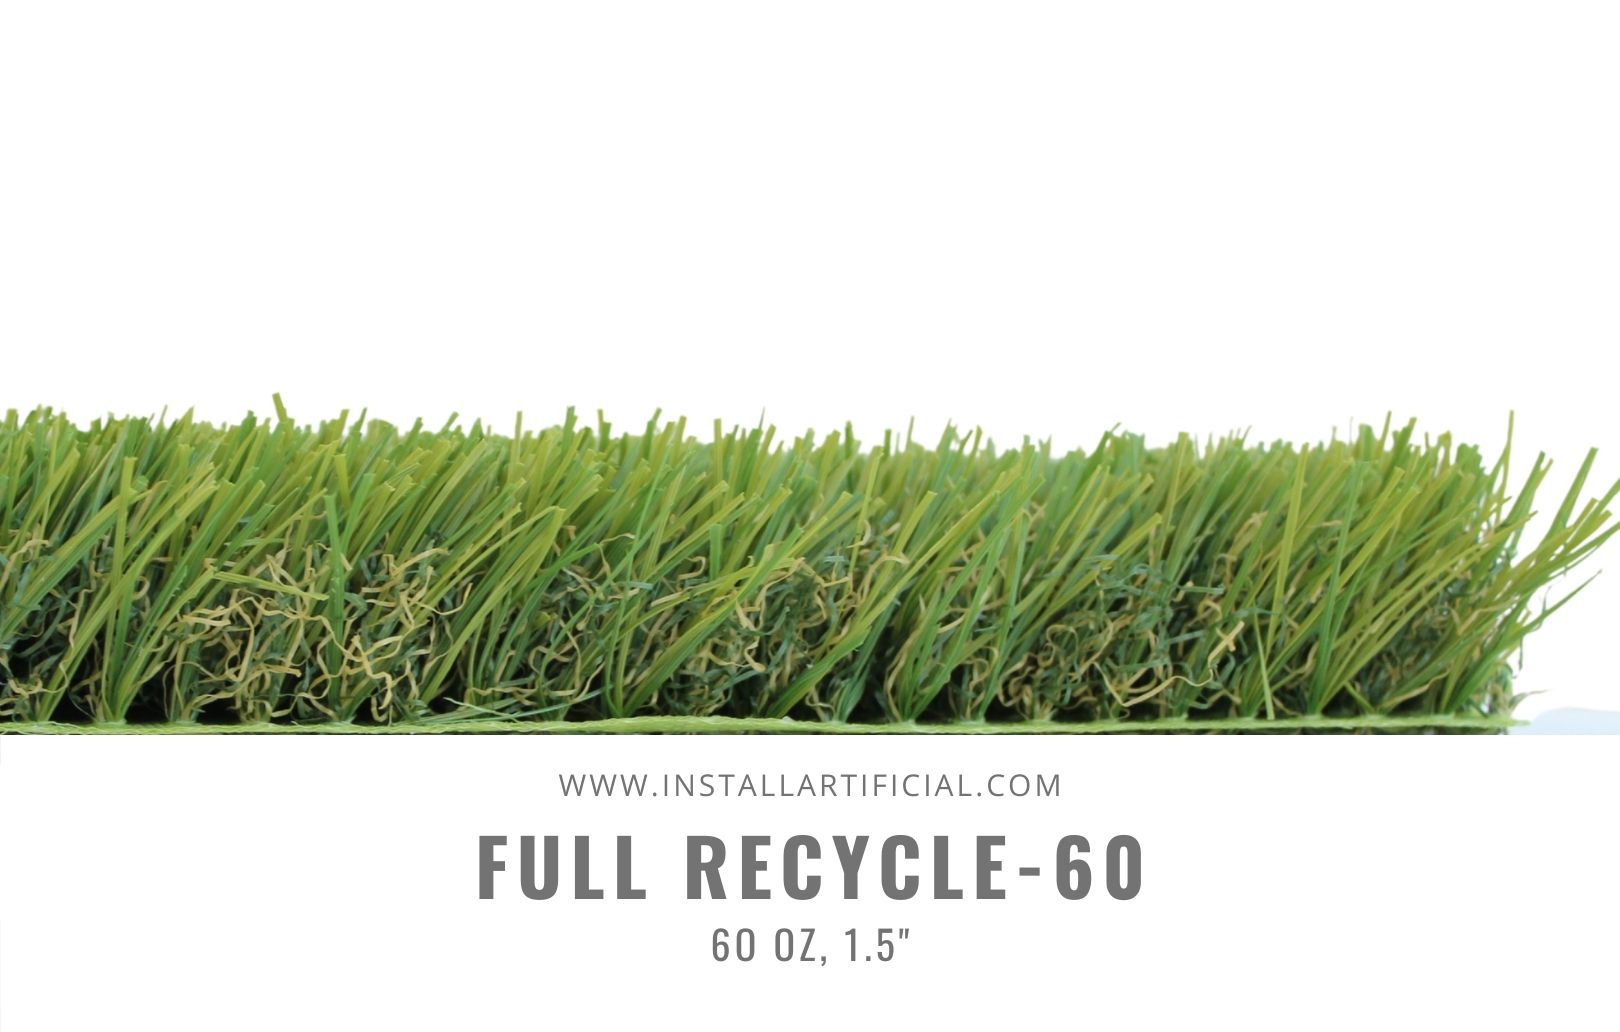 Full Recycle-60, Global Syn Turf, Side